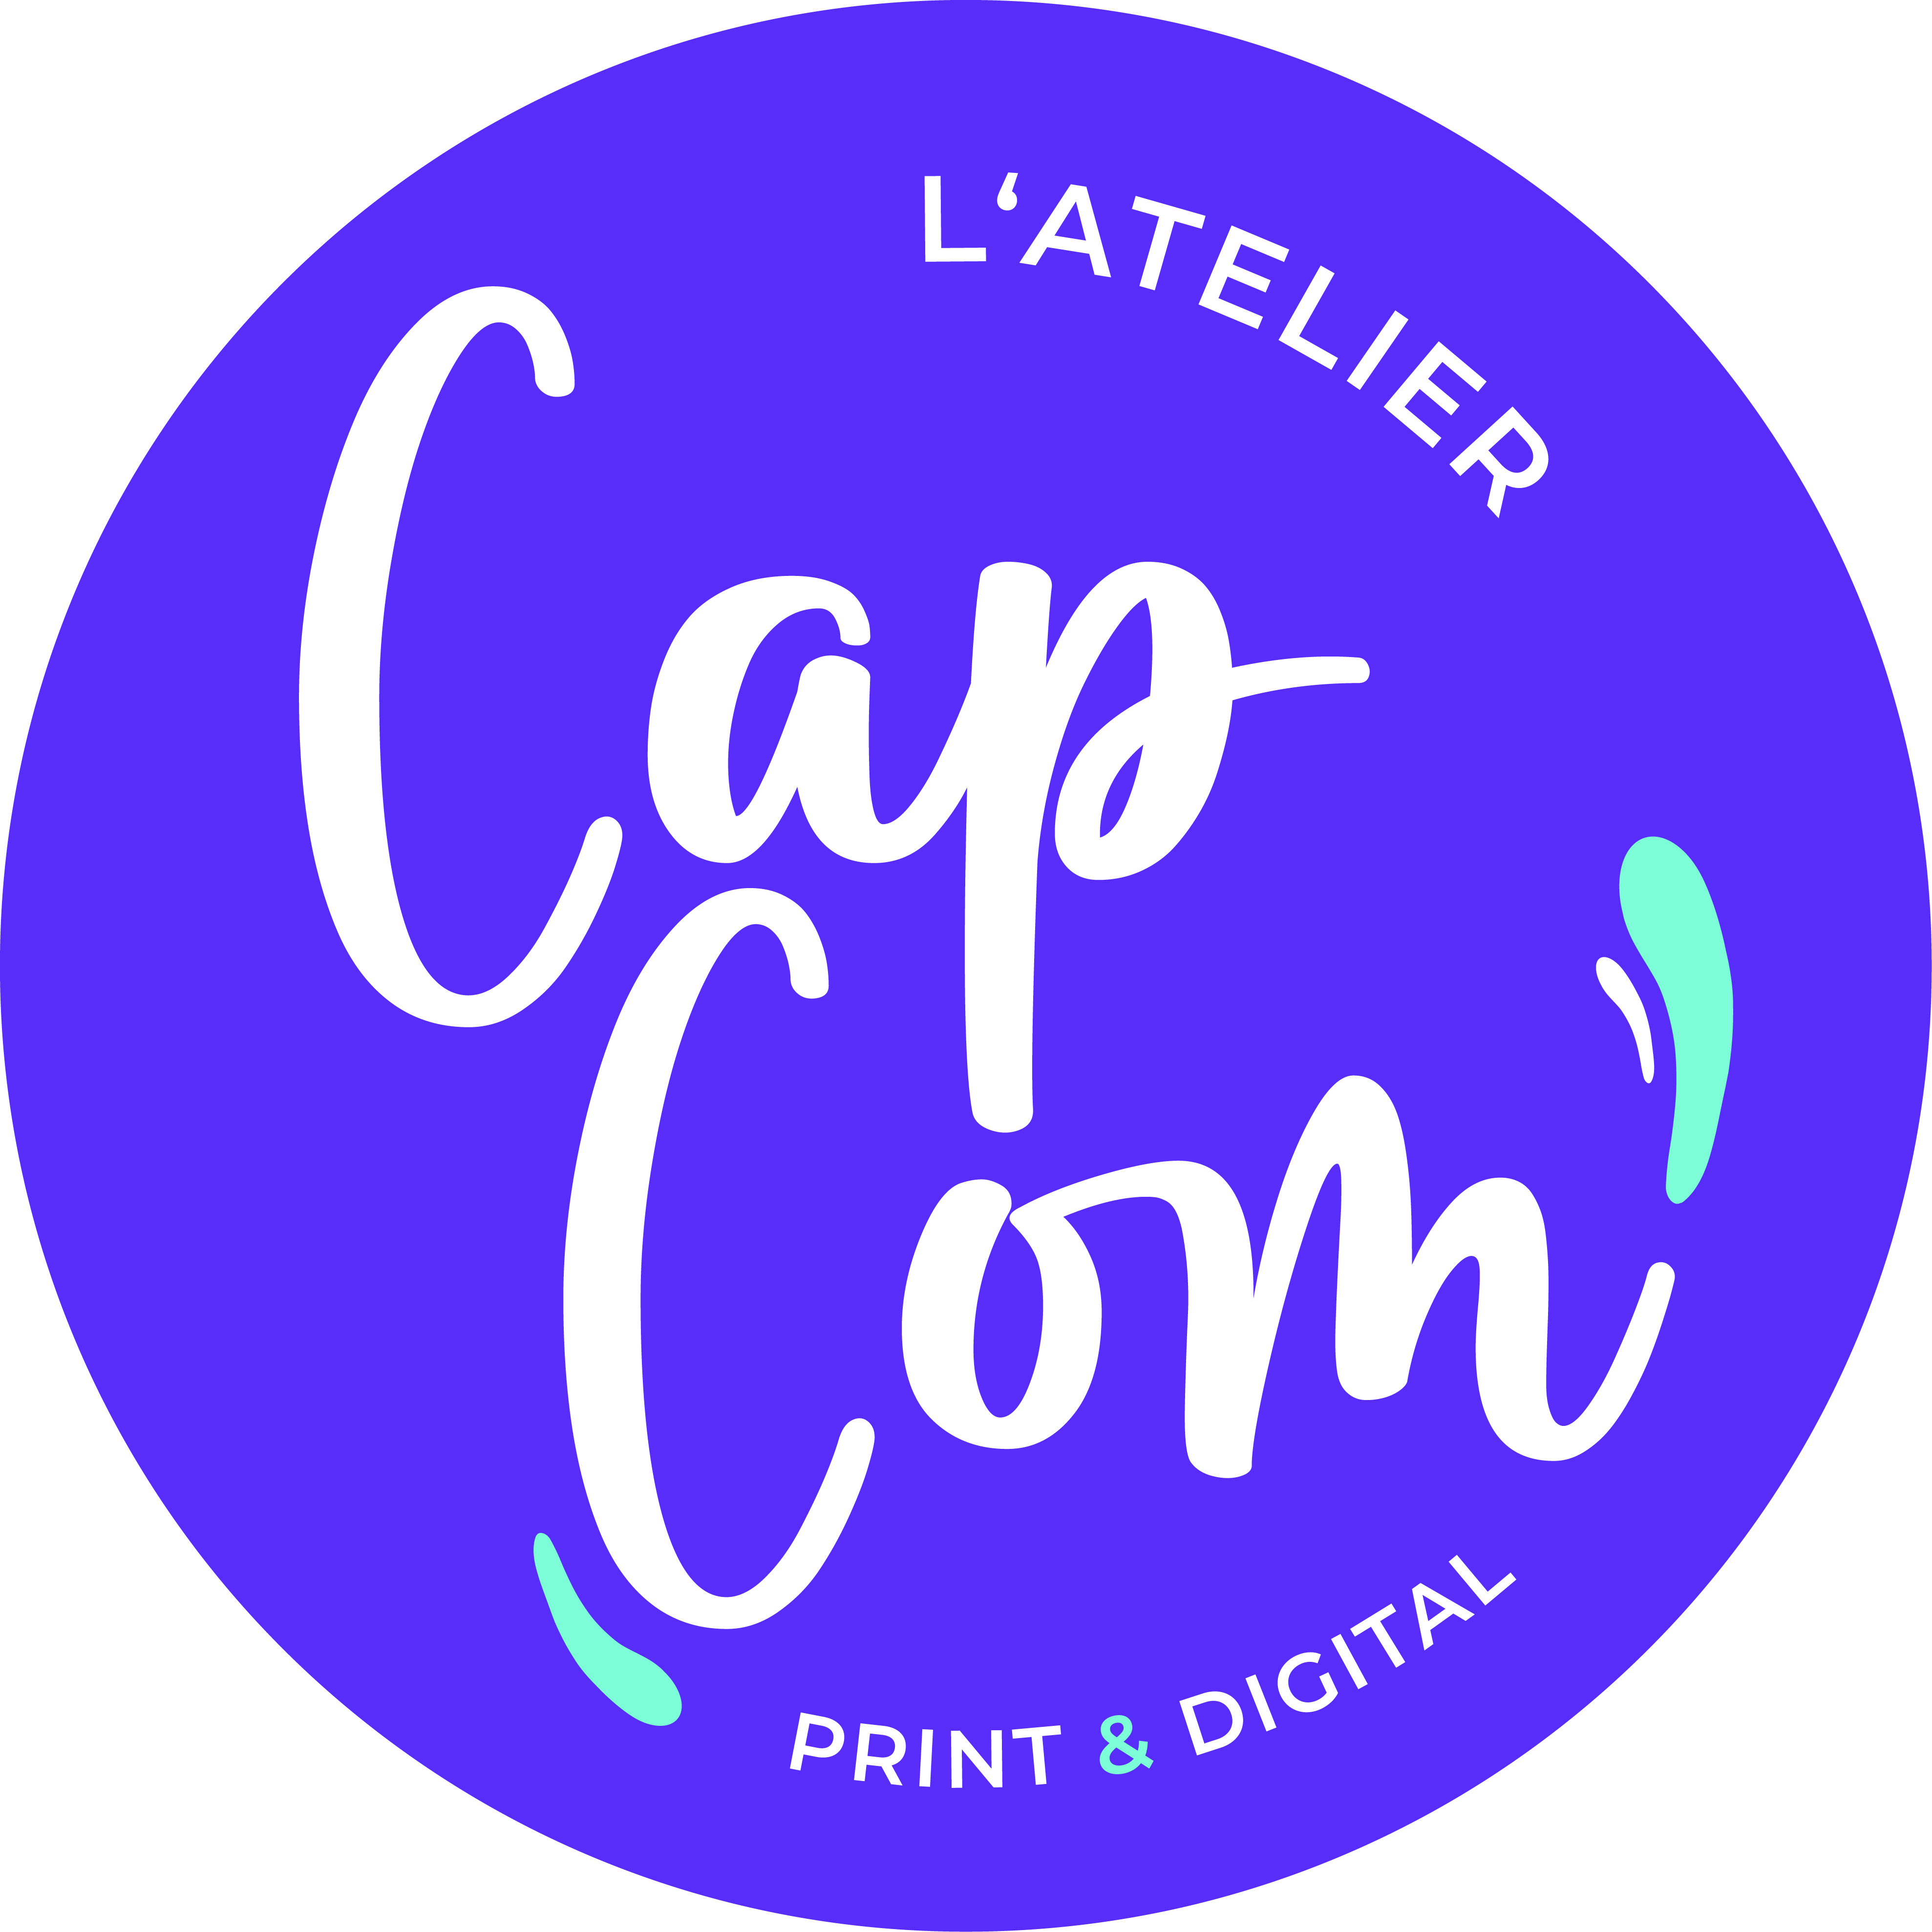 Atelier Cap Com' Print & Digital